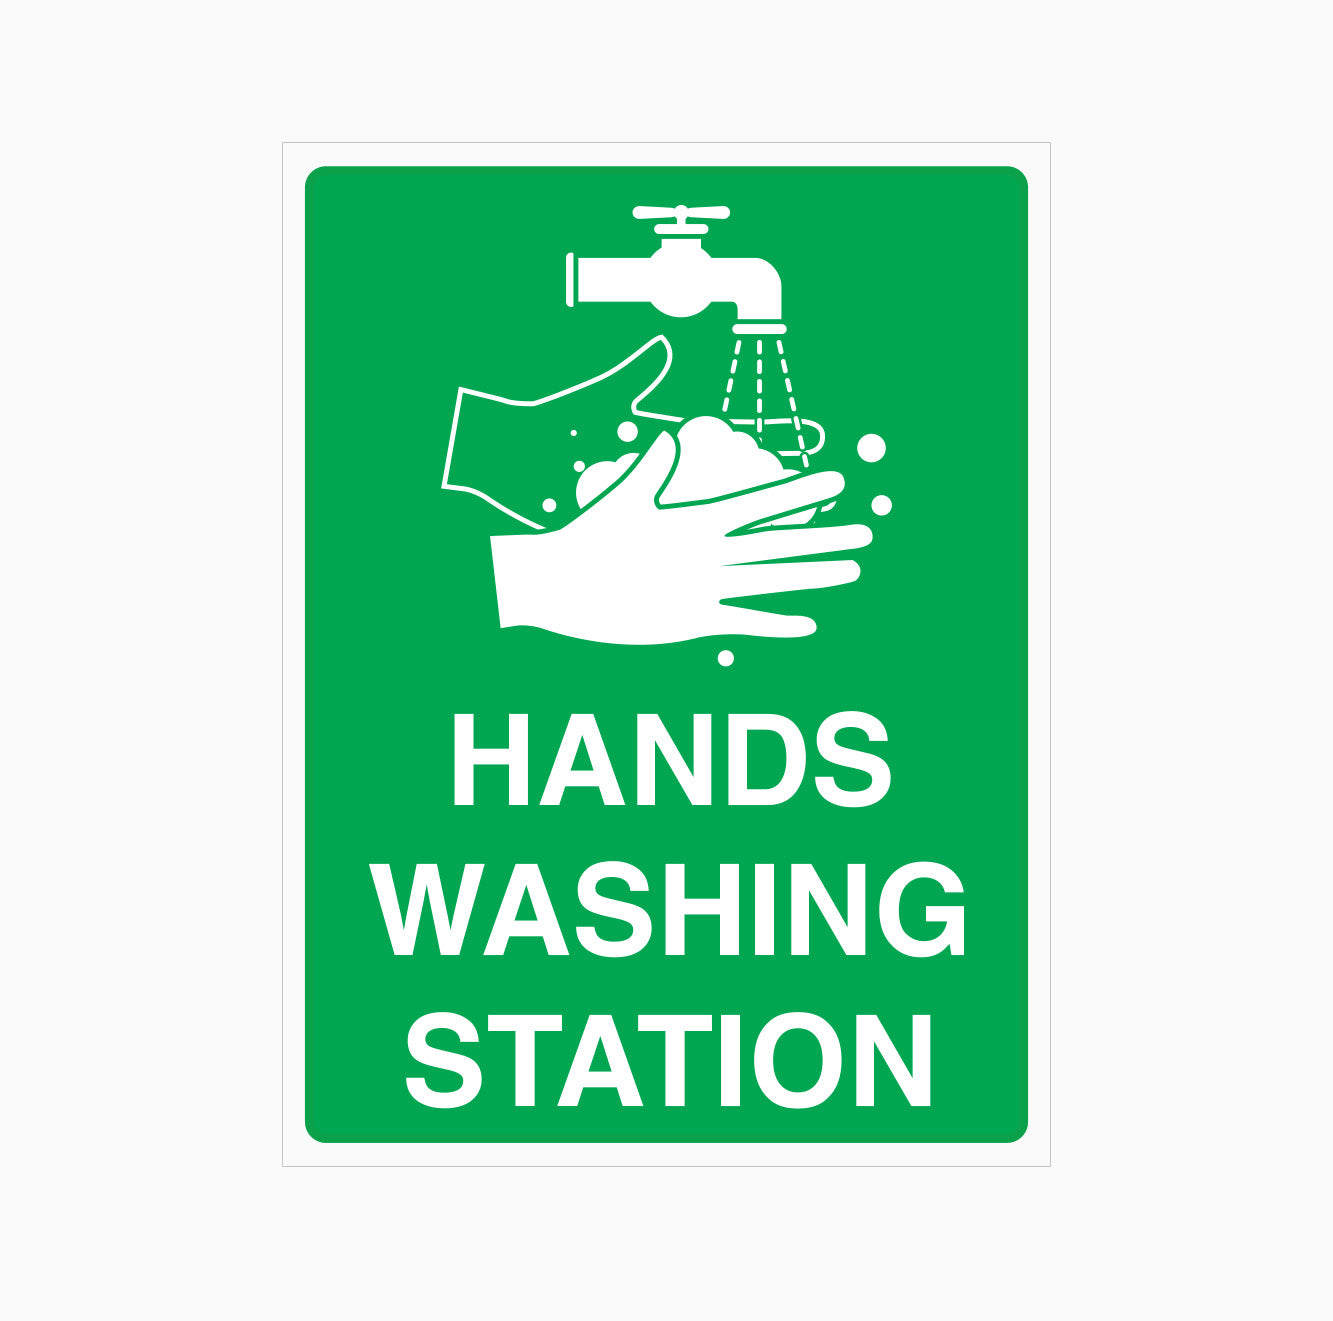 HANDS WASHING STATION SIGN